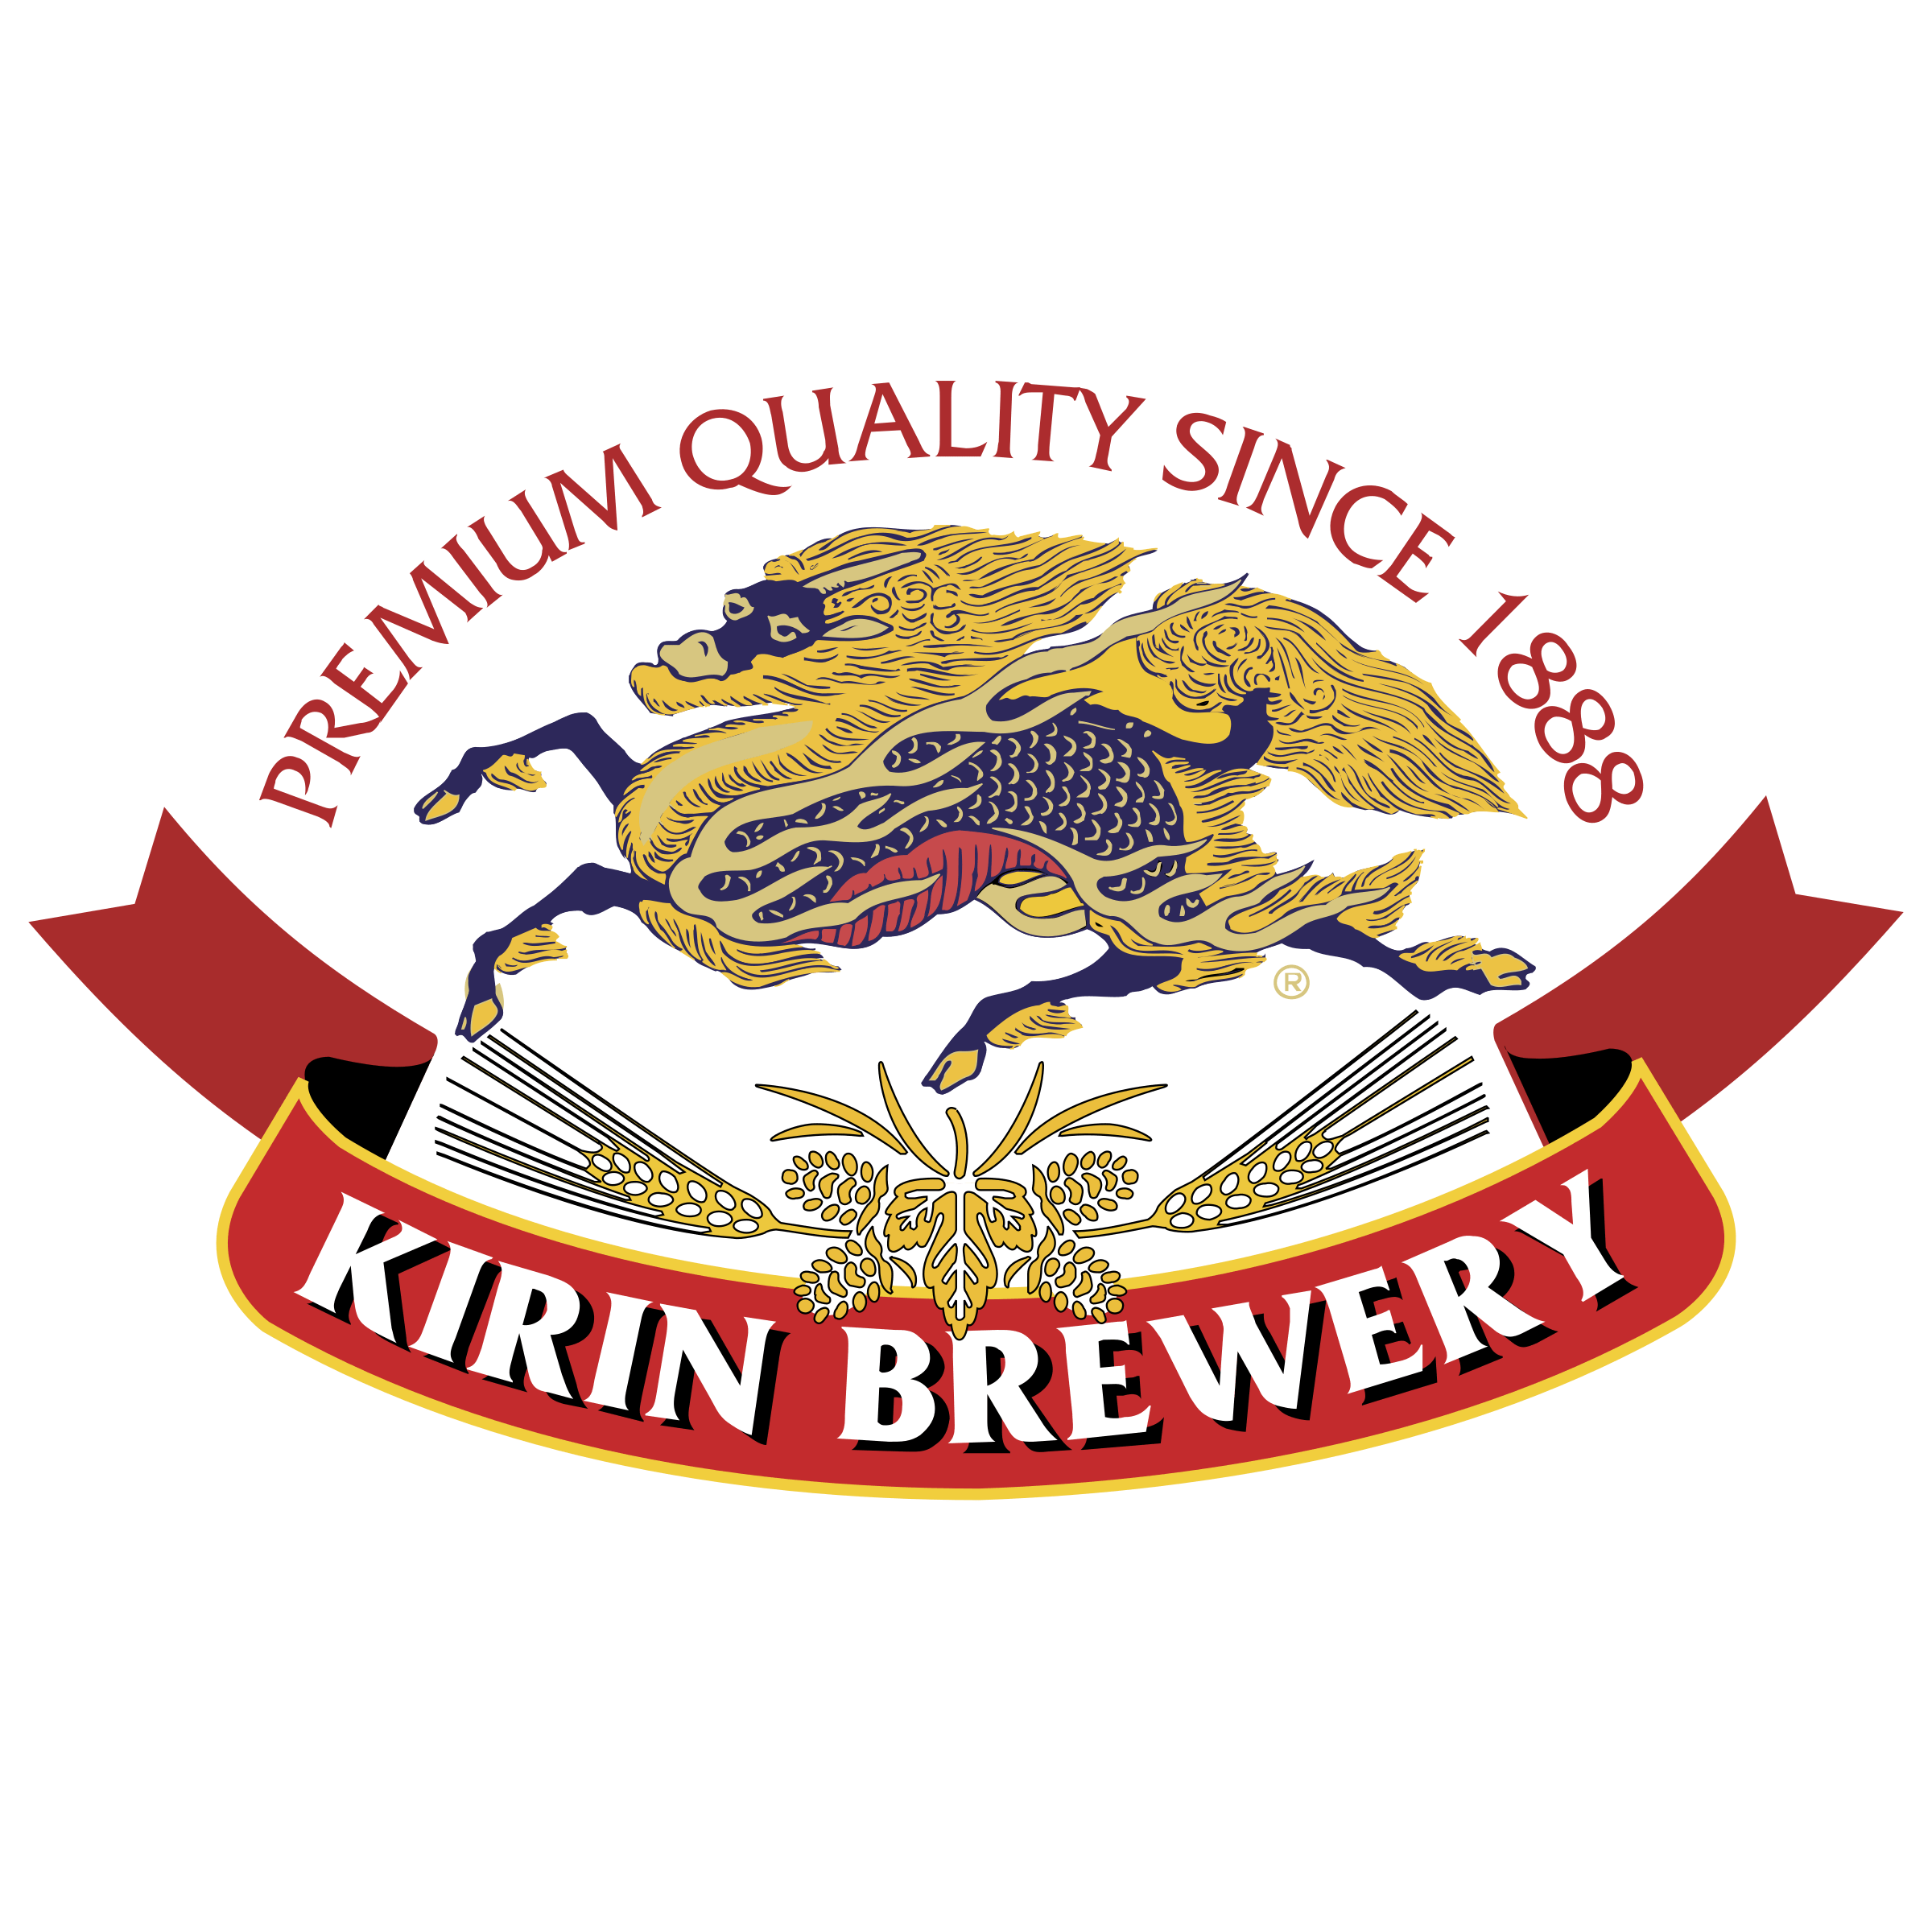 Kirin Logo - Kirin Brewery Logo PNG Transparent & SVG Vector - Freebie Supply